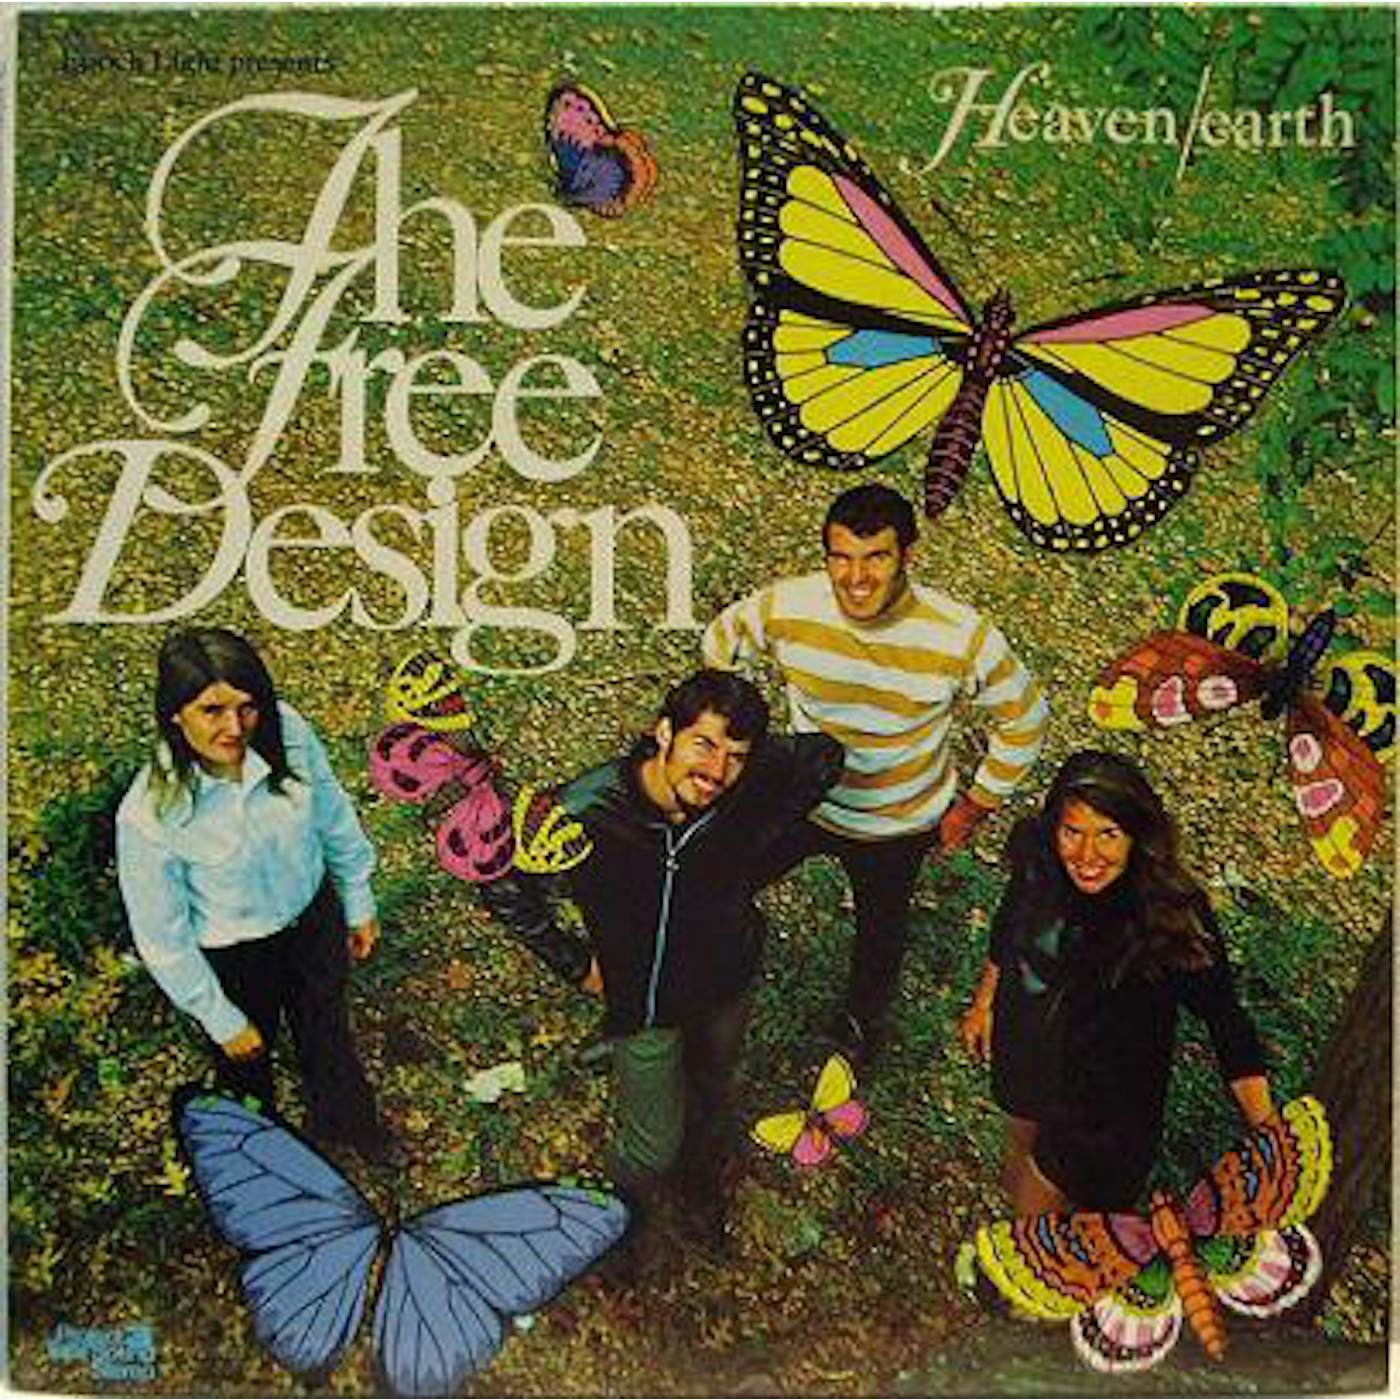 The Free Design HEAVEN / EARTH Vinyl Record